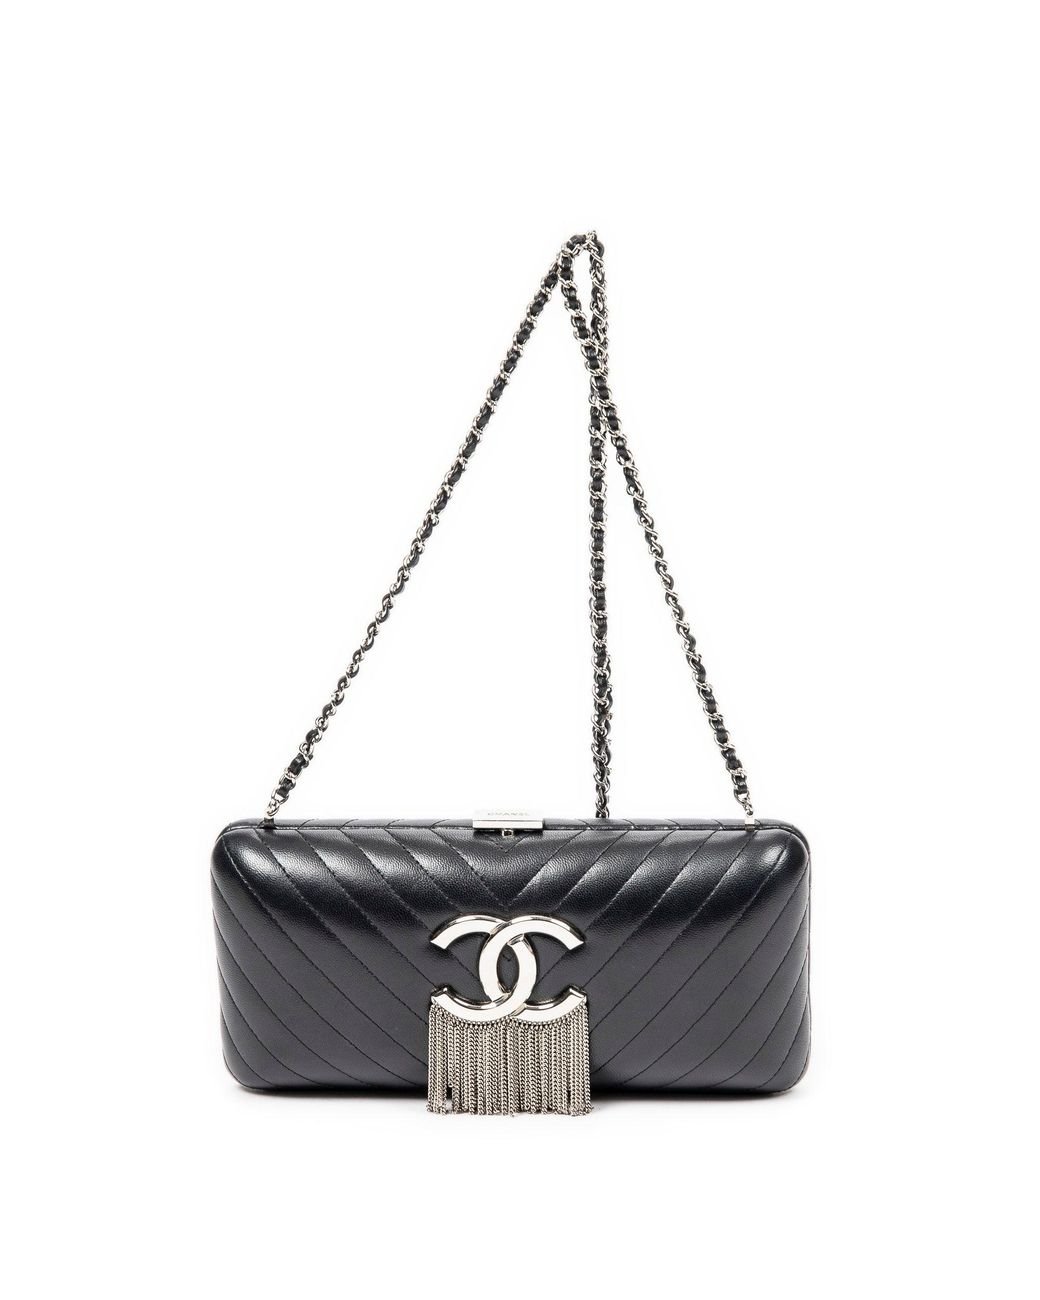 Chanel Chain Fringe Clutch in Black